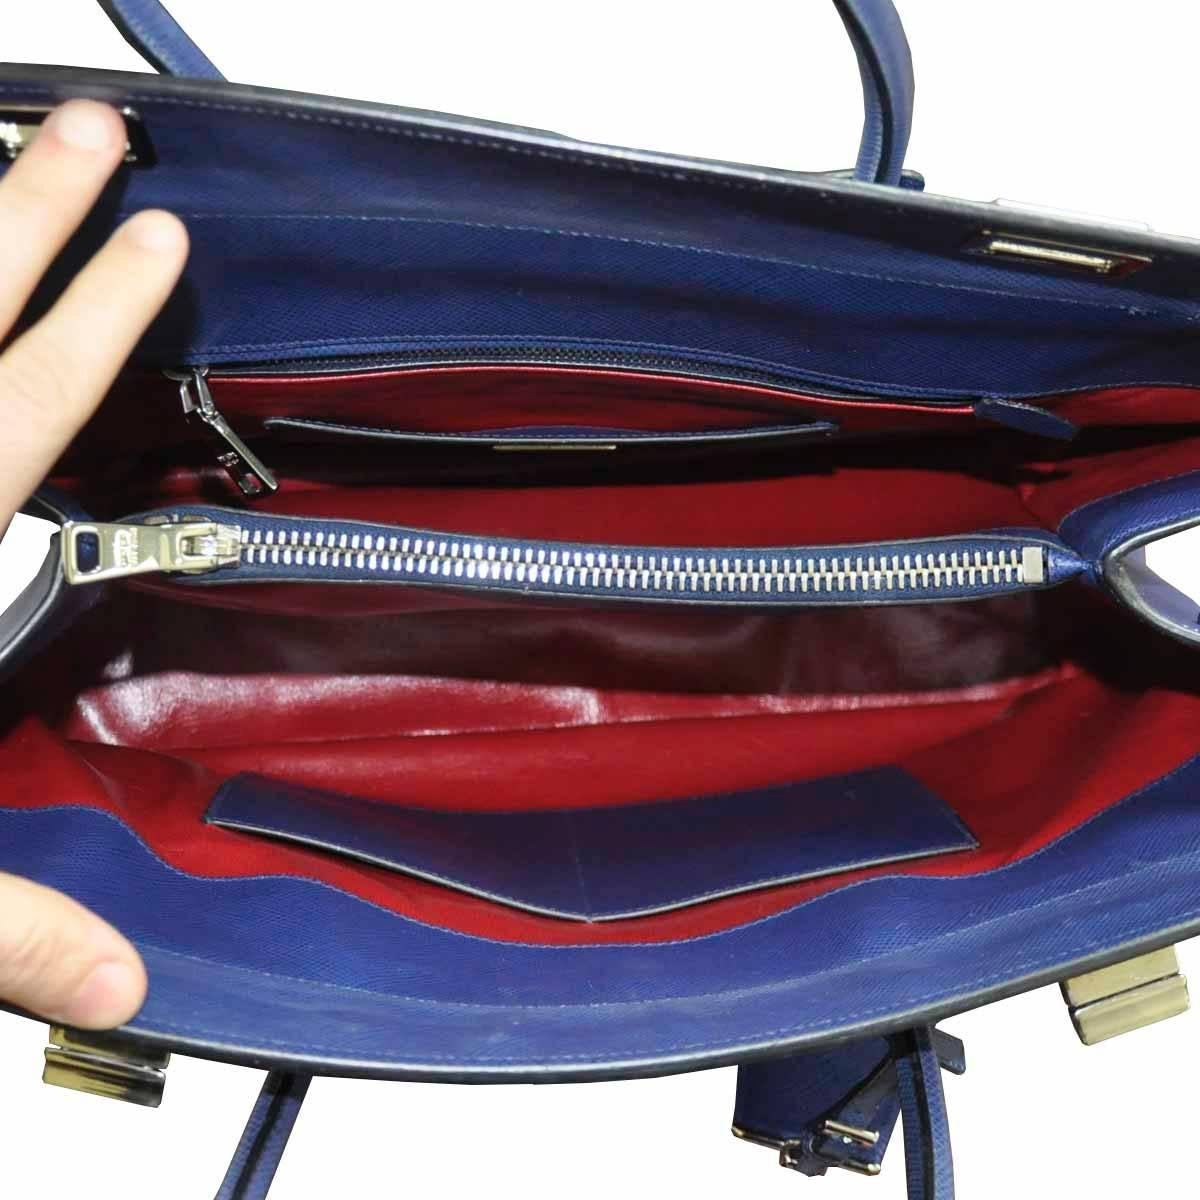 Prada Saffiano Cuir Twin Bag Blue Leather Tote Handbag 1